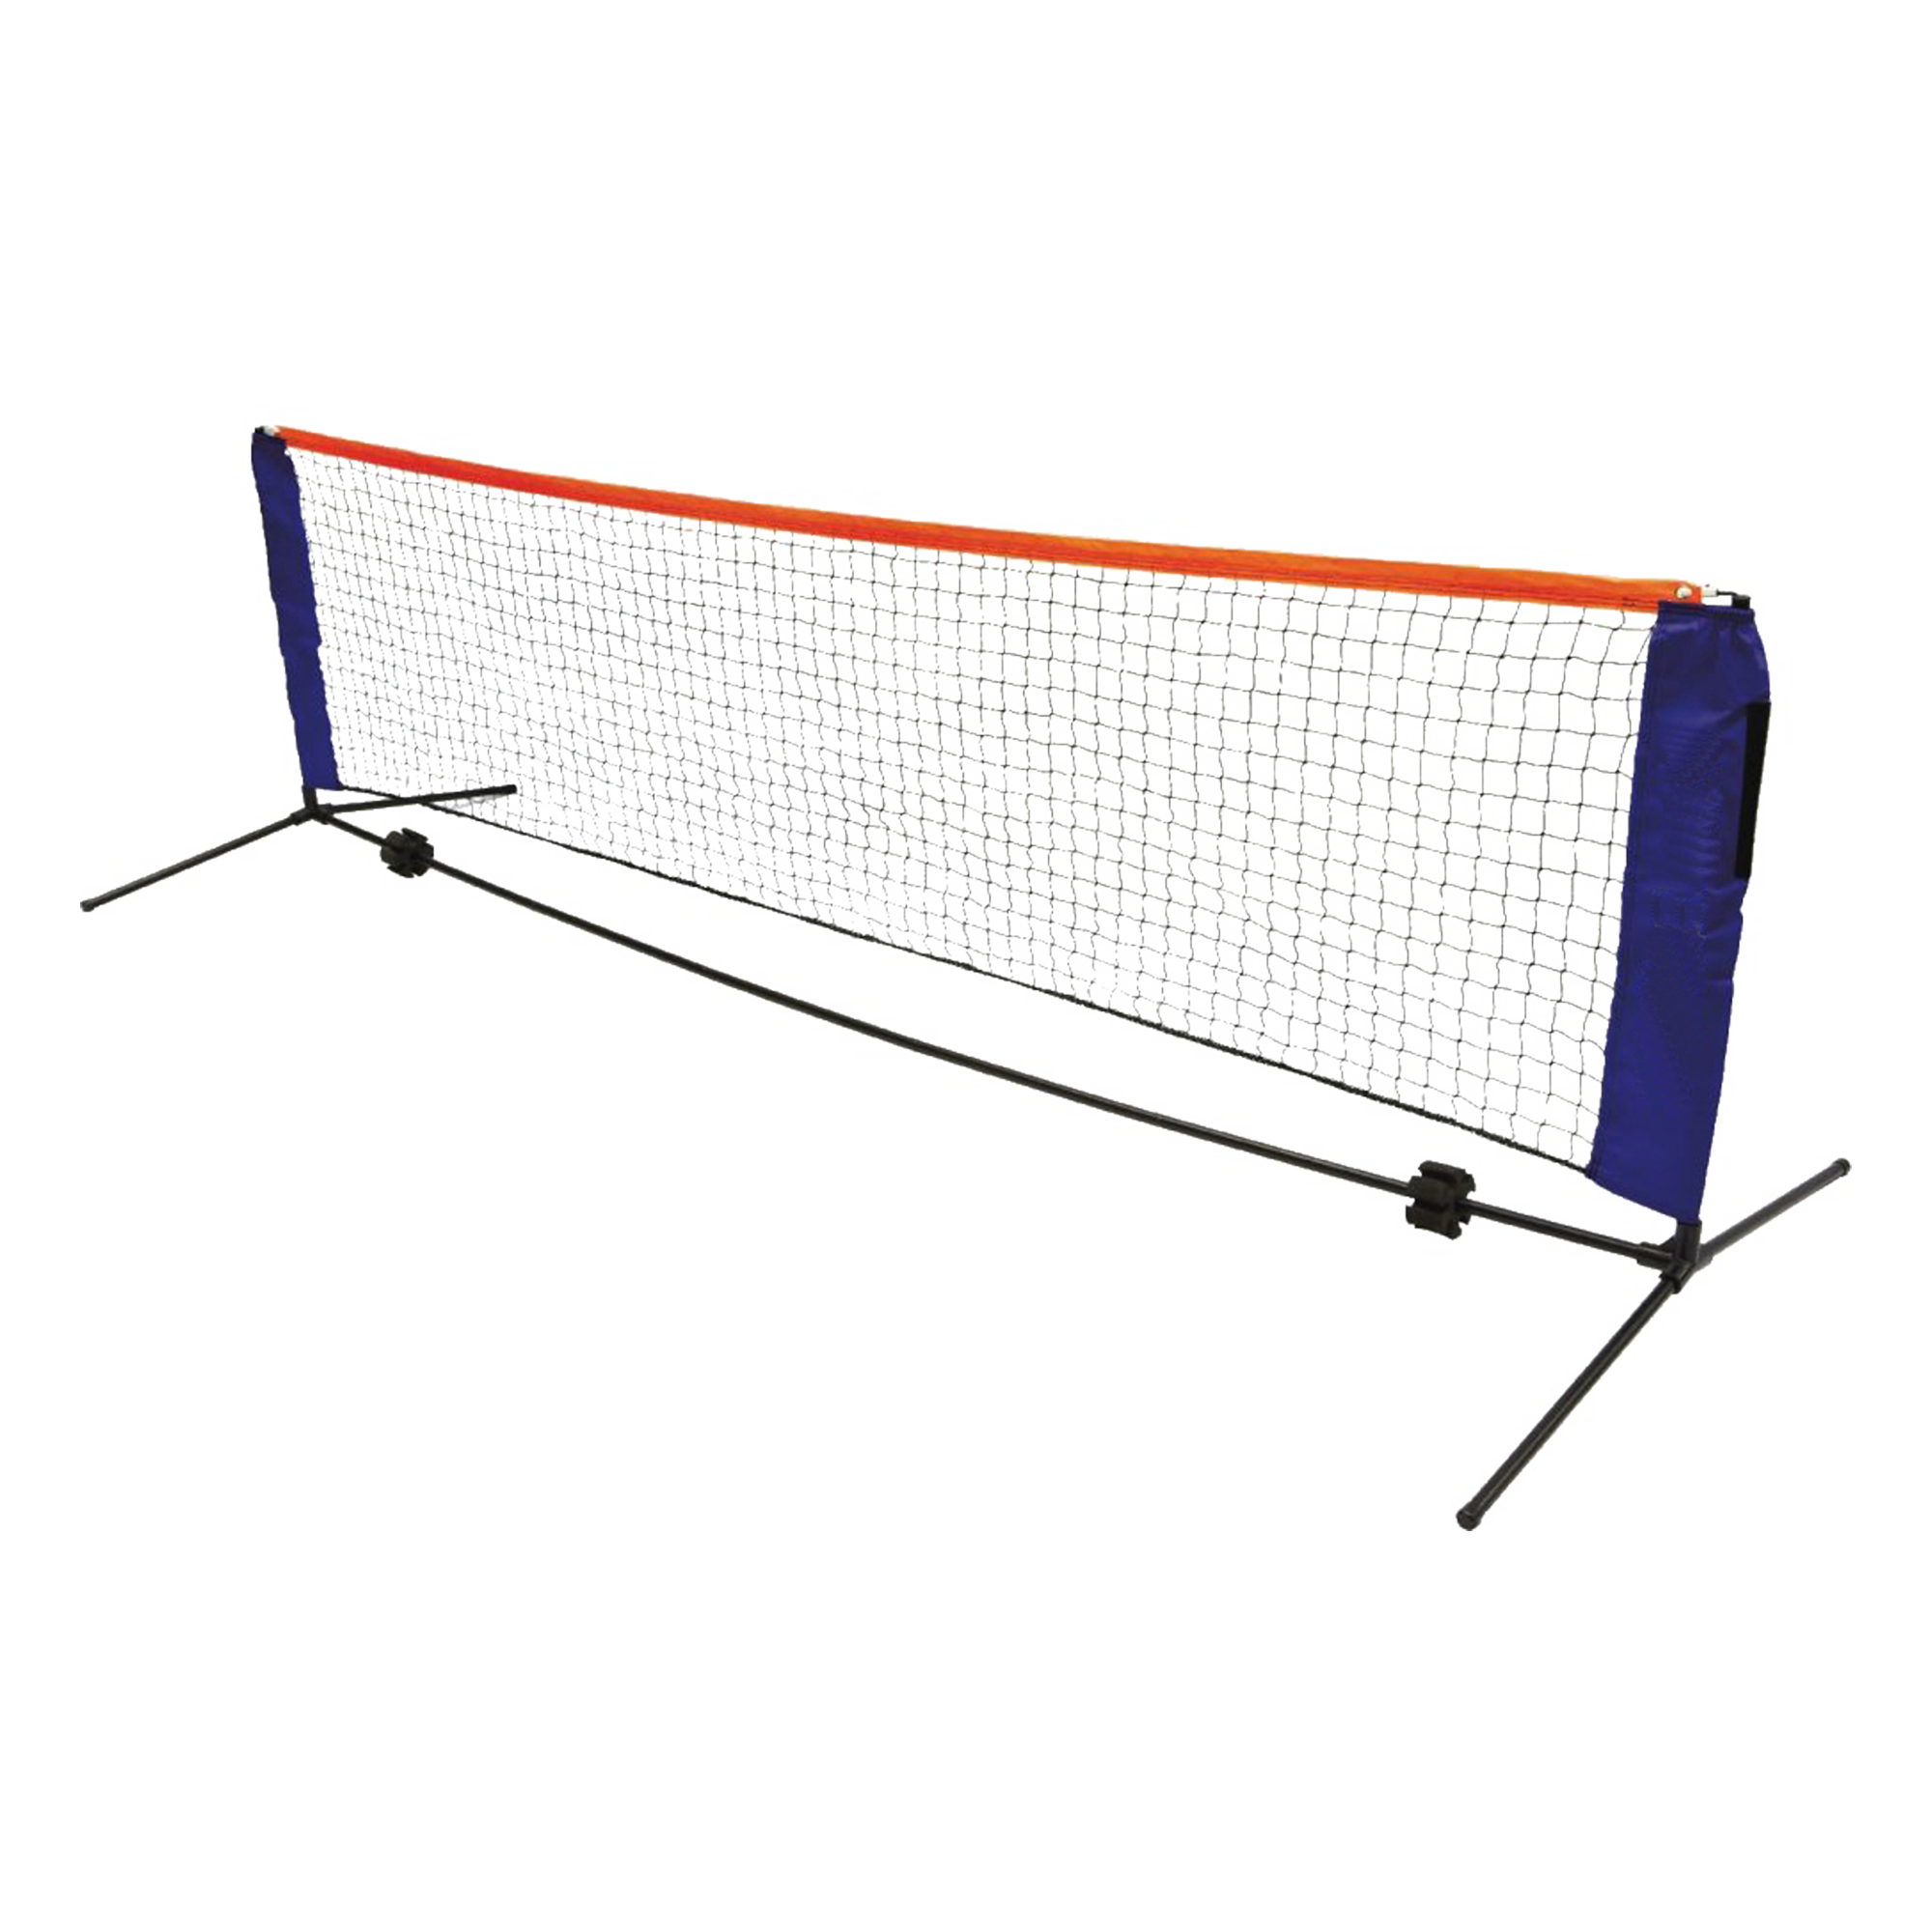 6 Meters Portable Foldable Mini Tennis Net & Post Set | Buy Tennis ...